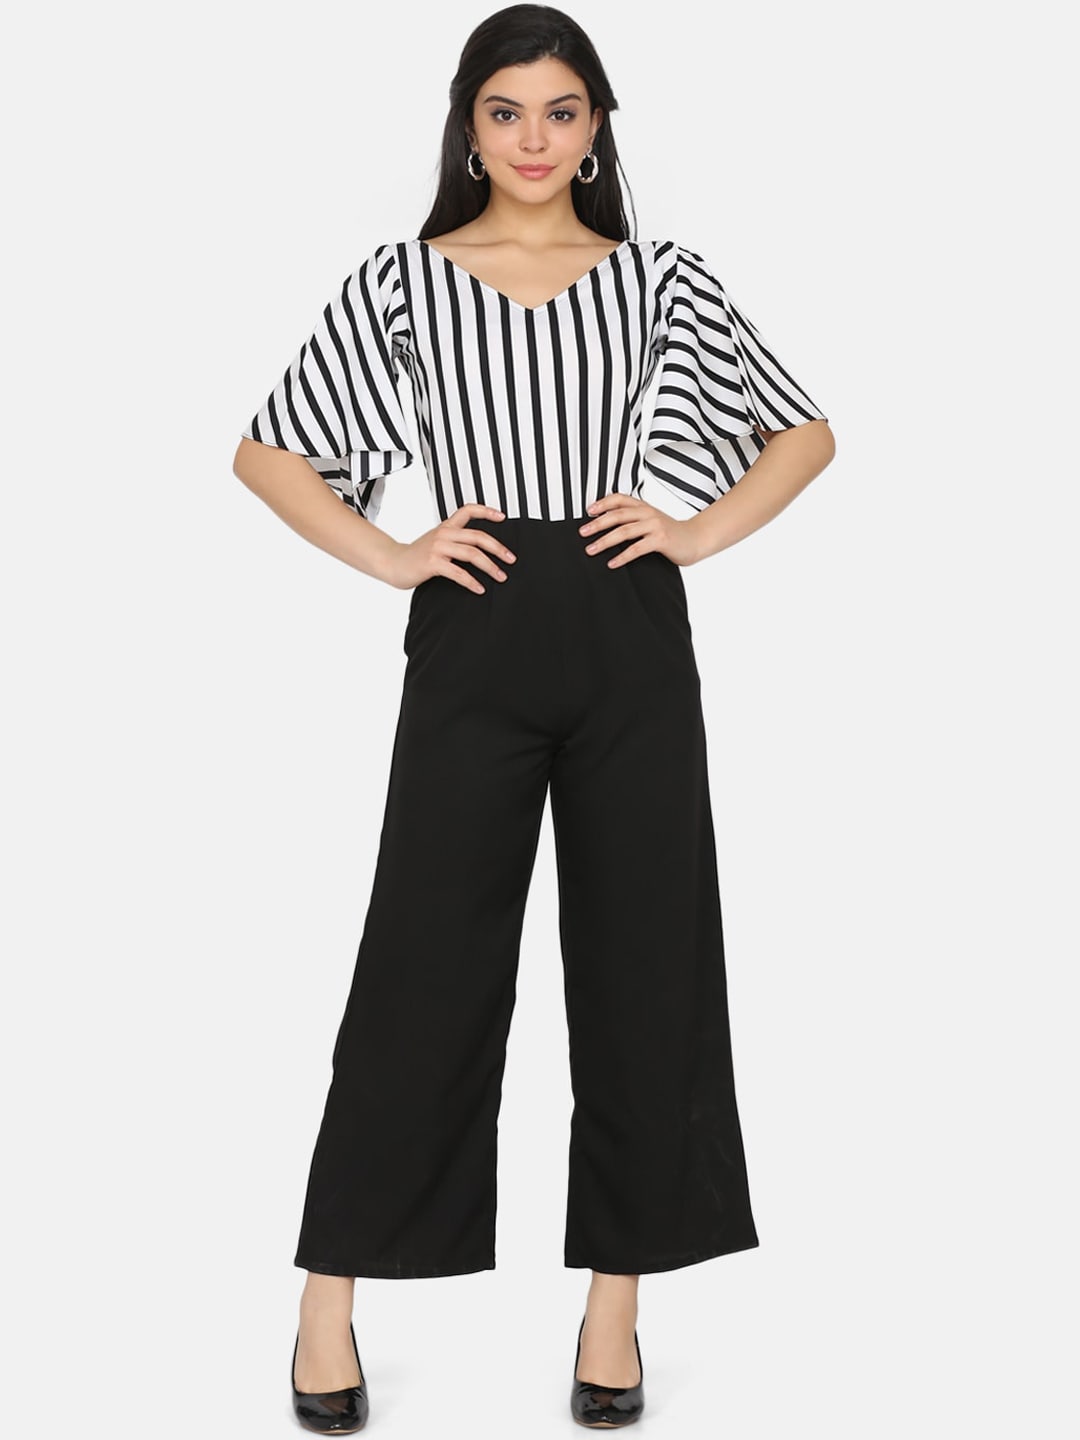 Eavan Women Black & White Striped Basic Jumpsuit Price in India